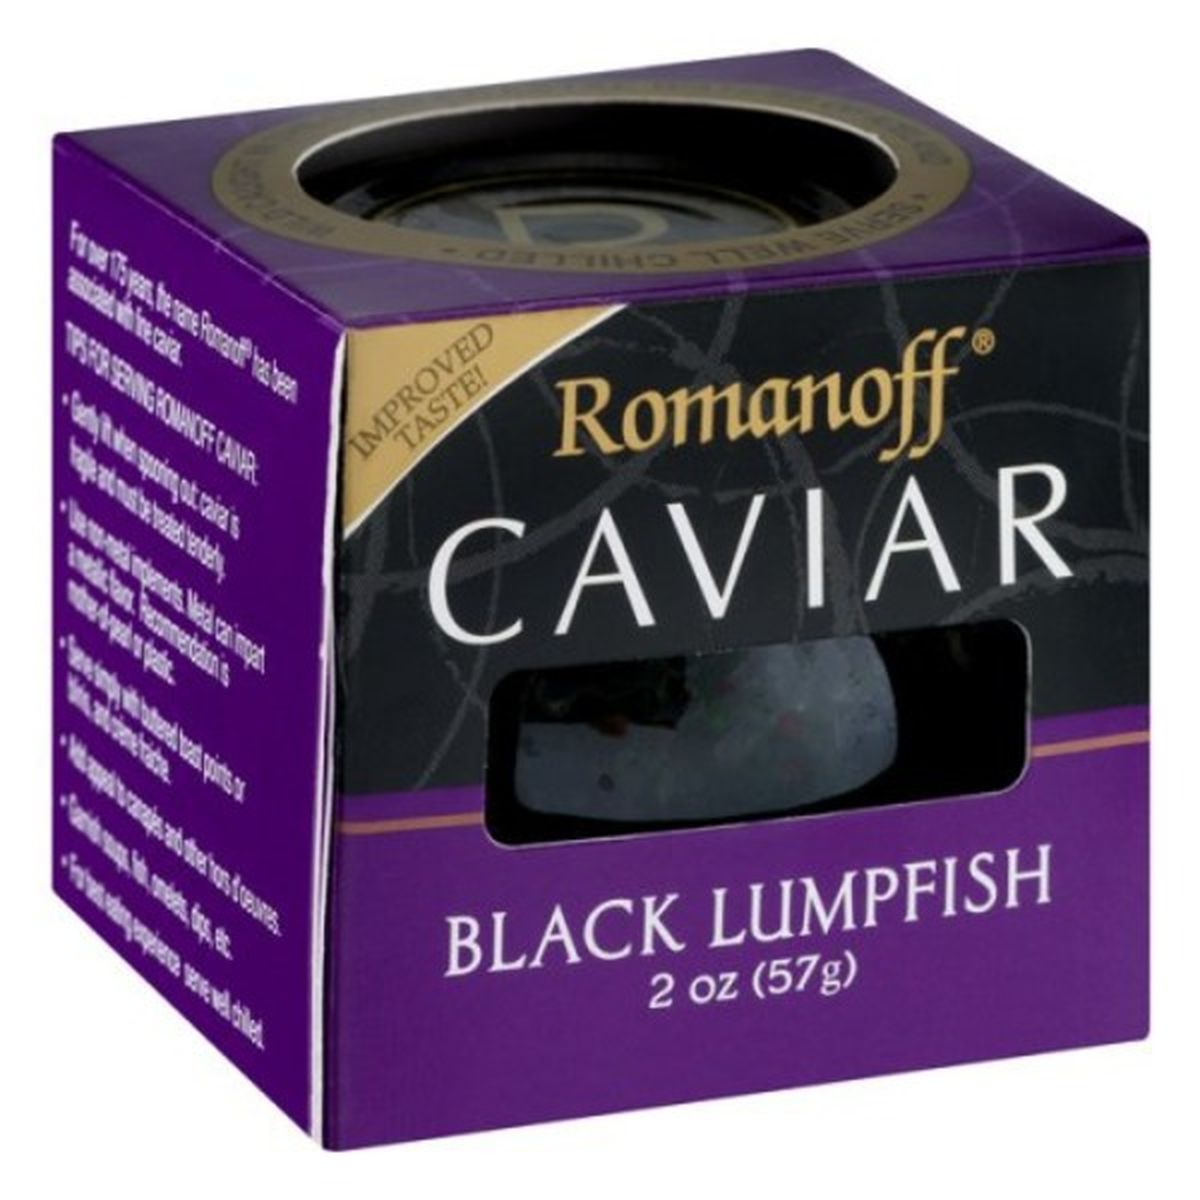 Calories in Romanoff Caviar Caviar, Black Lumpfish